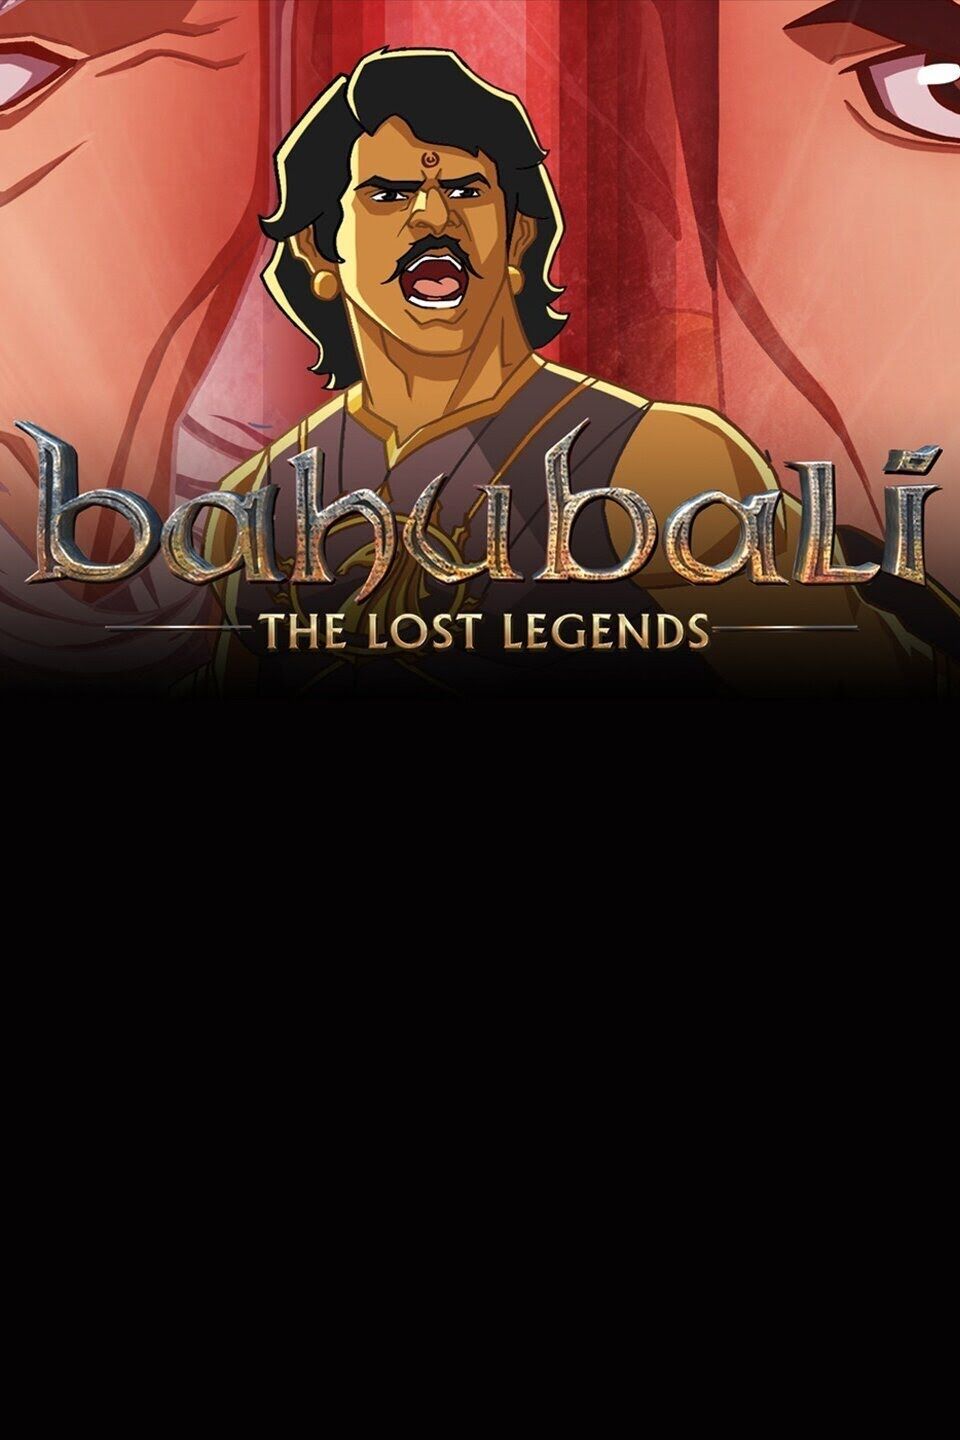 Baahubali: The Lost Legends | Soundeffects Wiki | Fandom